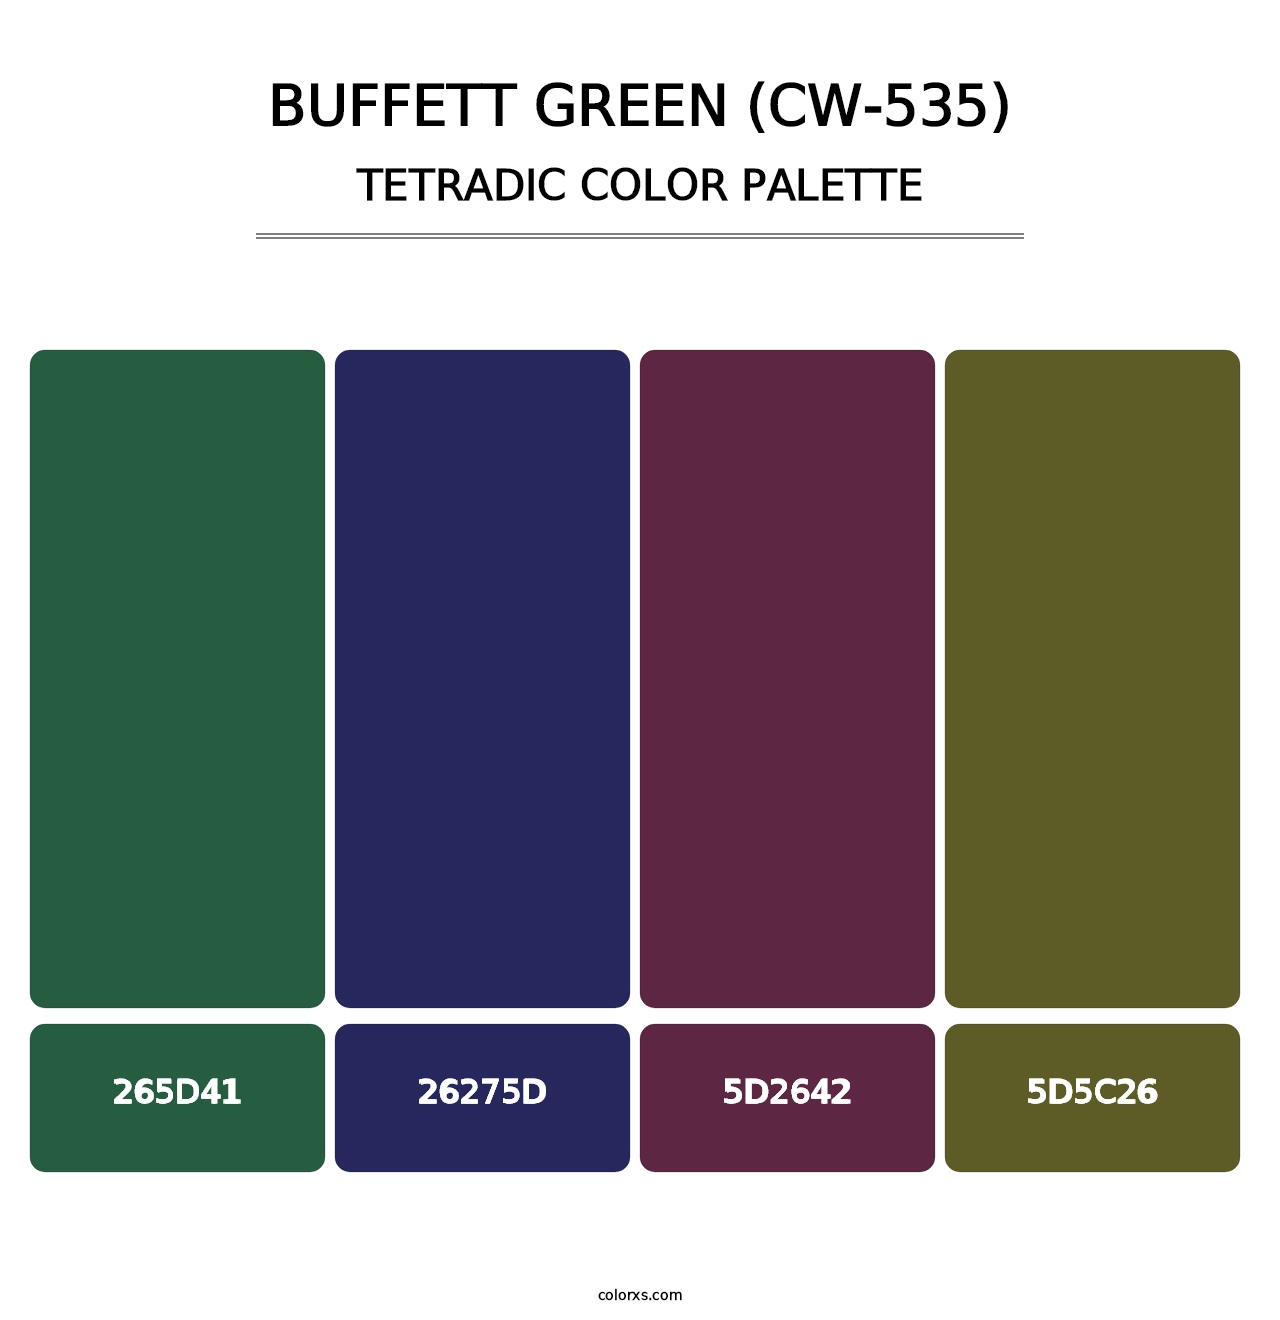 Buffett Green (CW-535) - Tetradic Color Palette